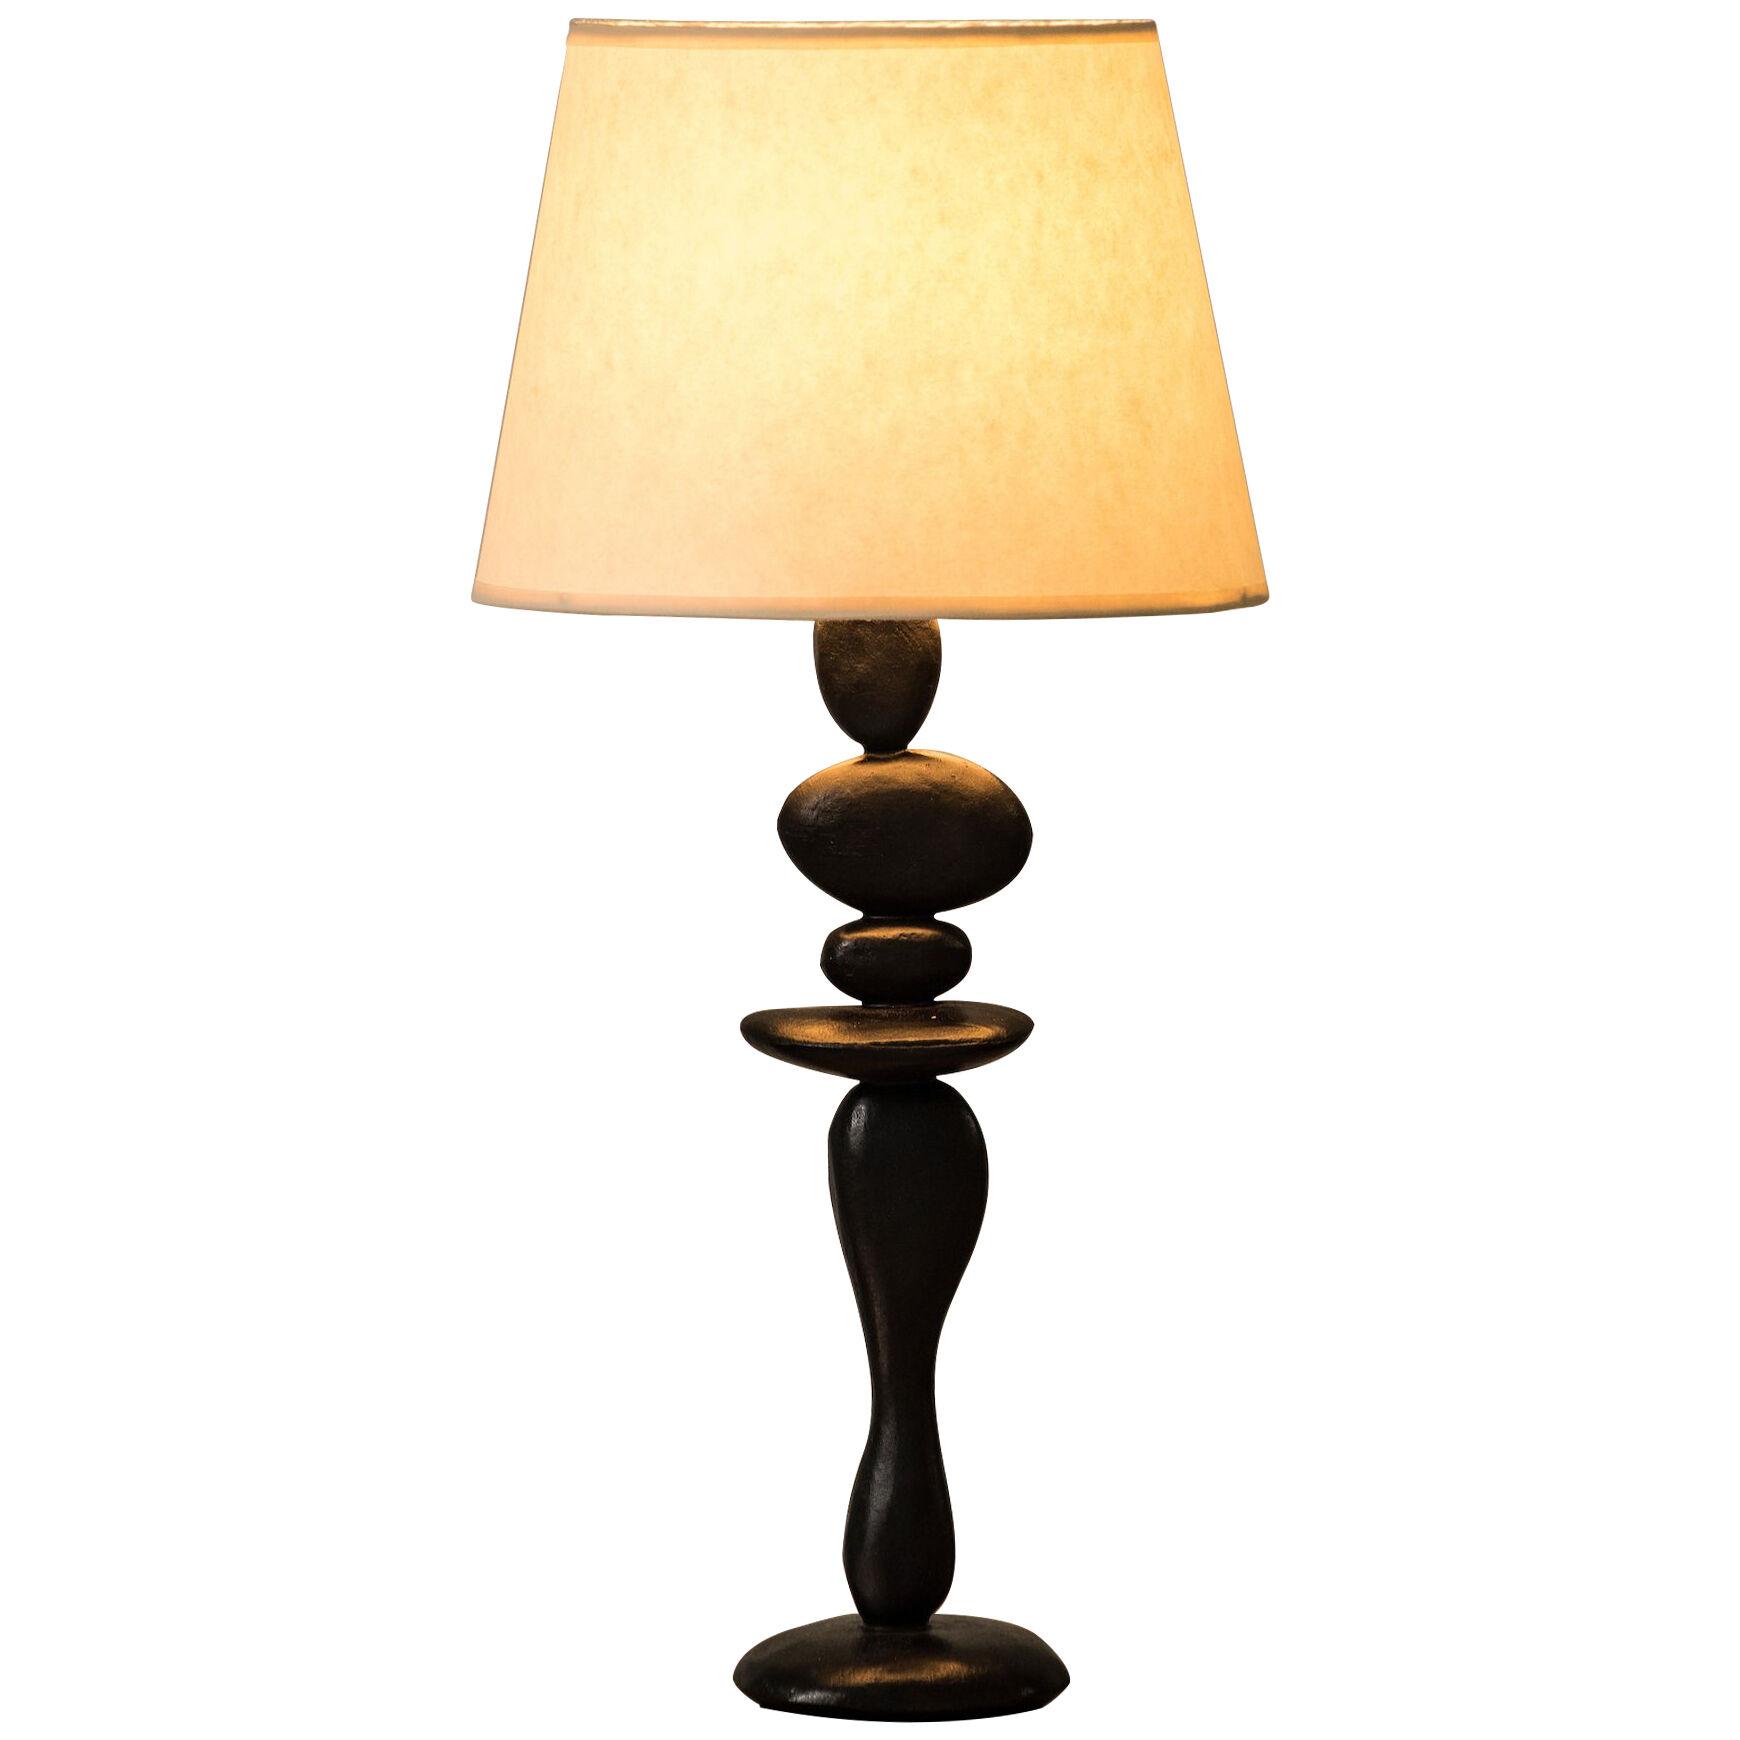 Table lamp "Tall Minime"